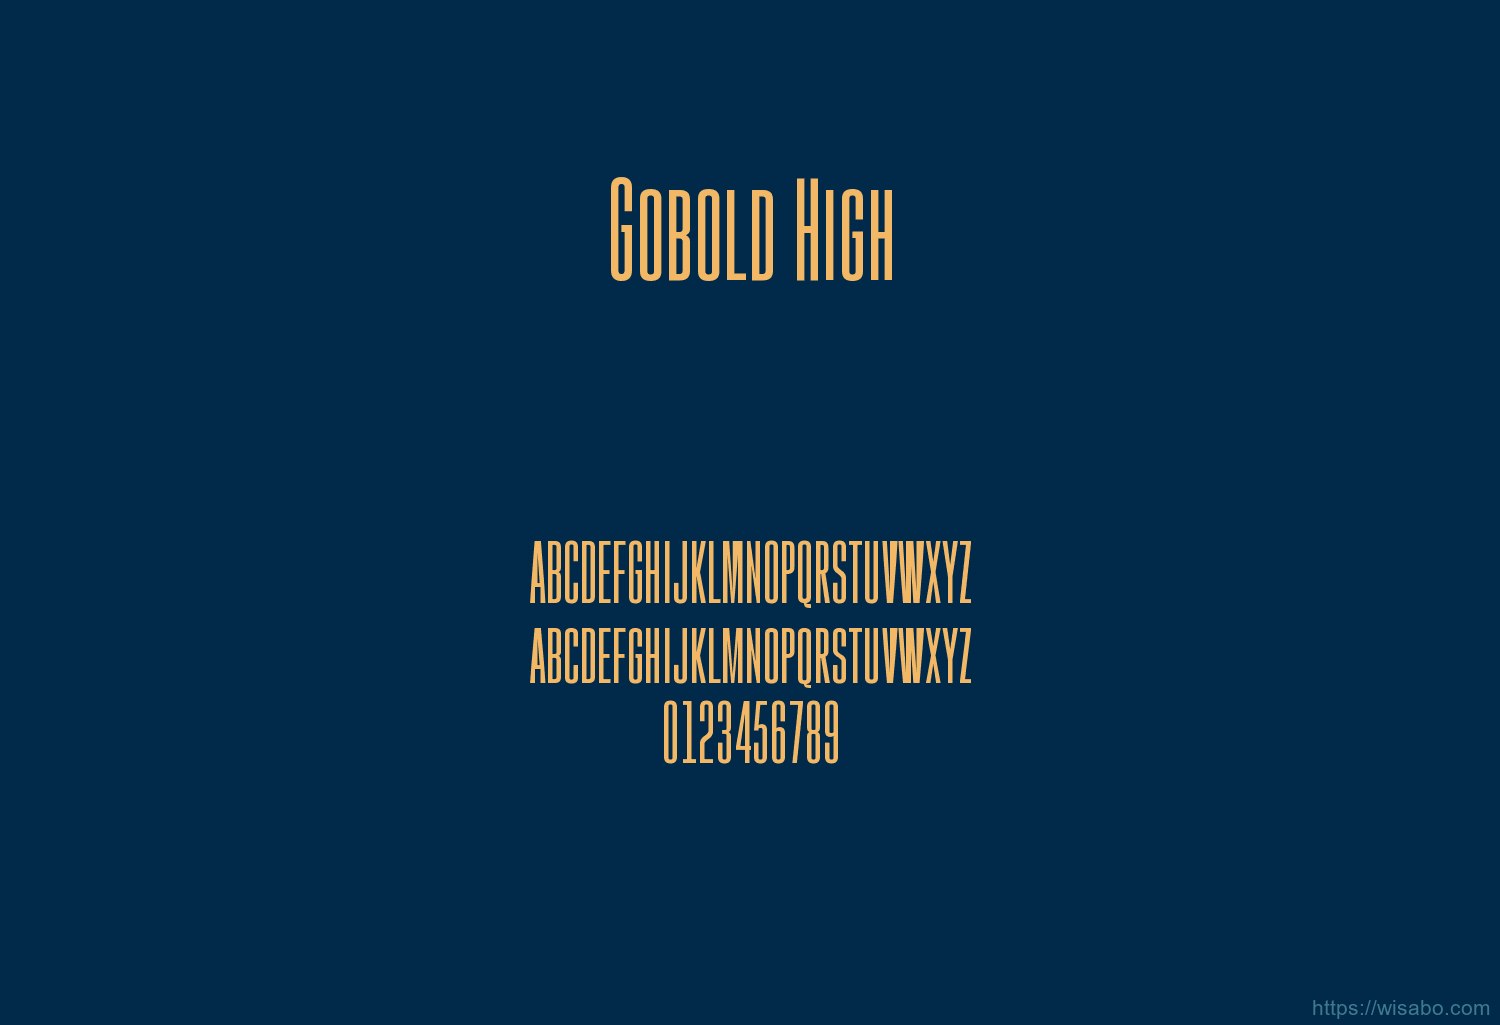 Gobold High